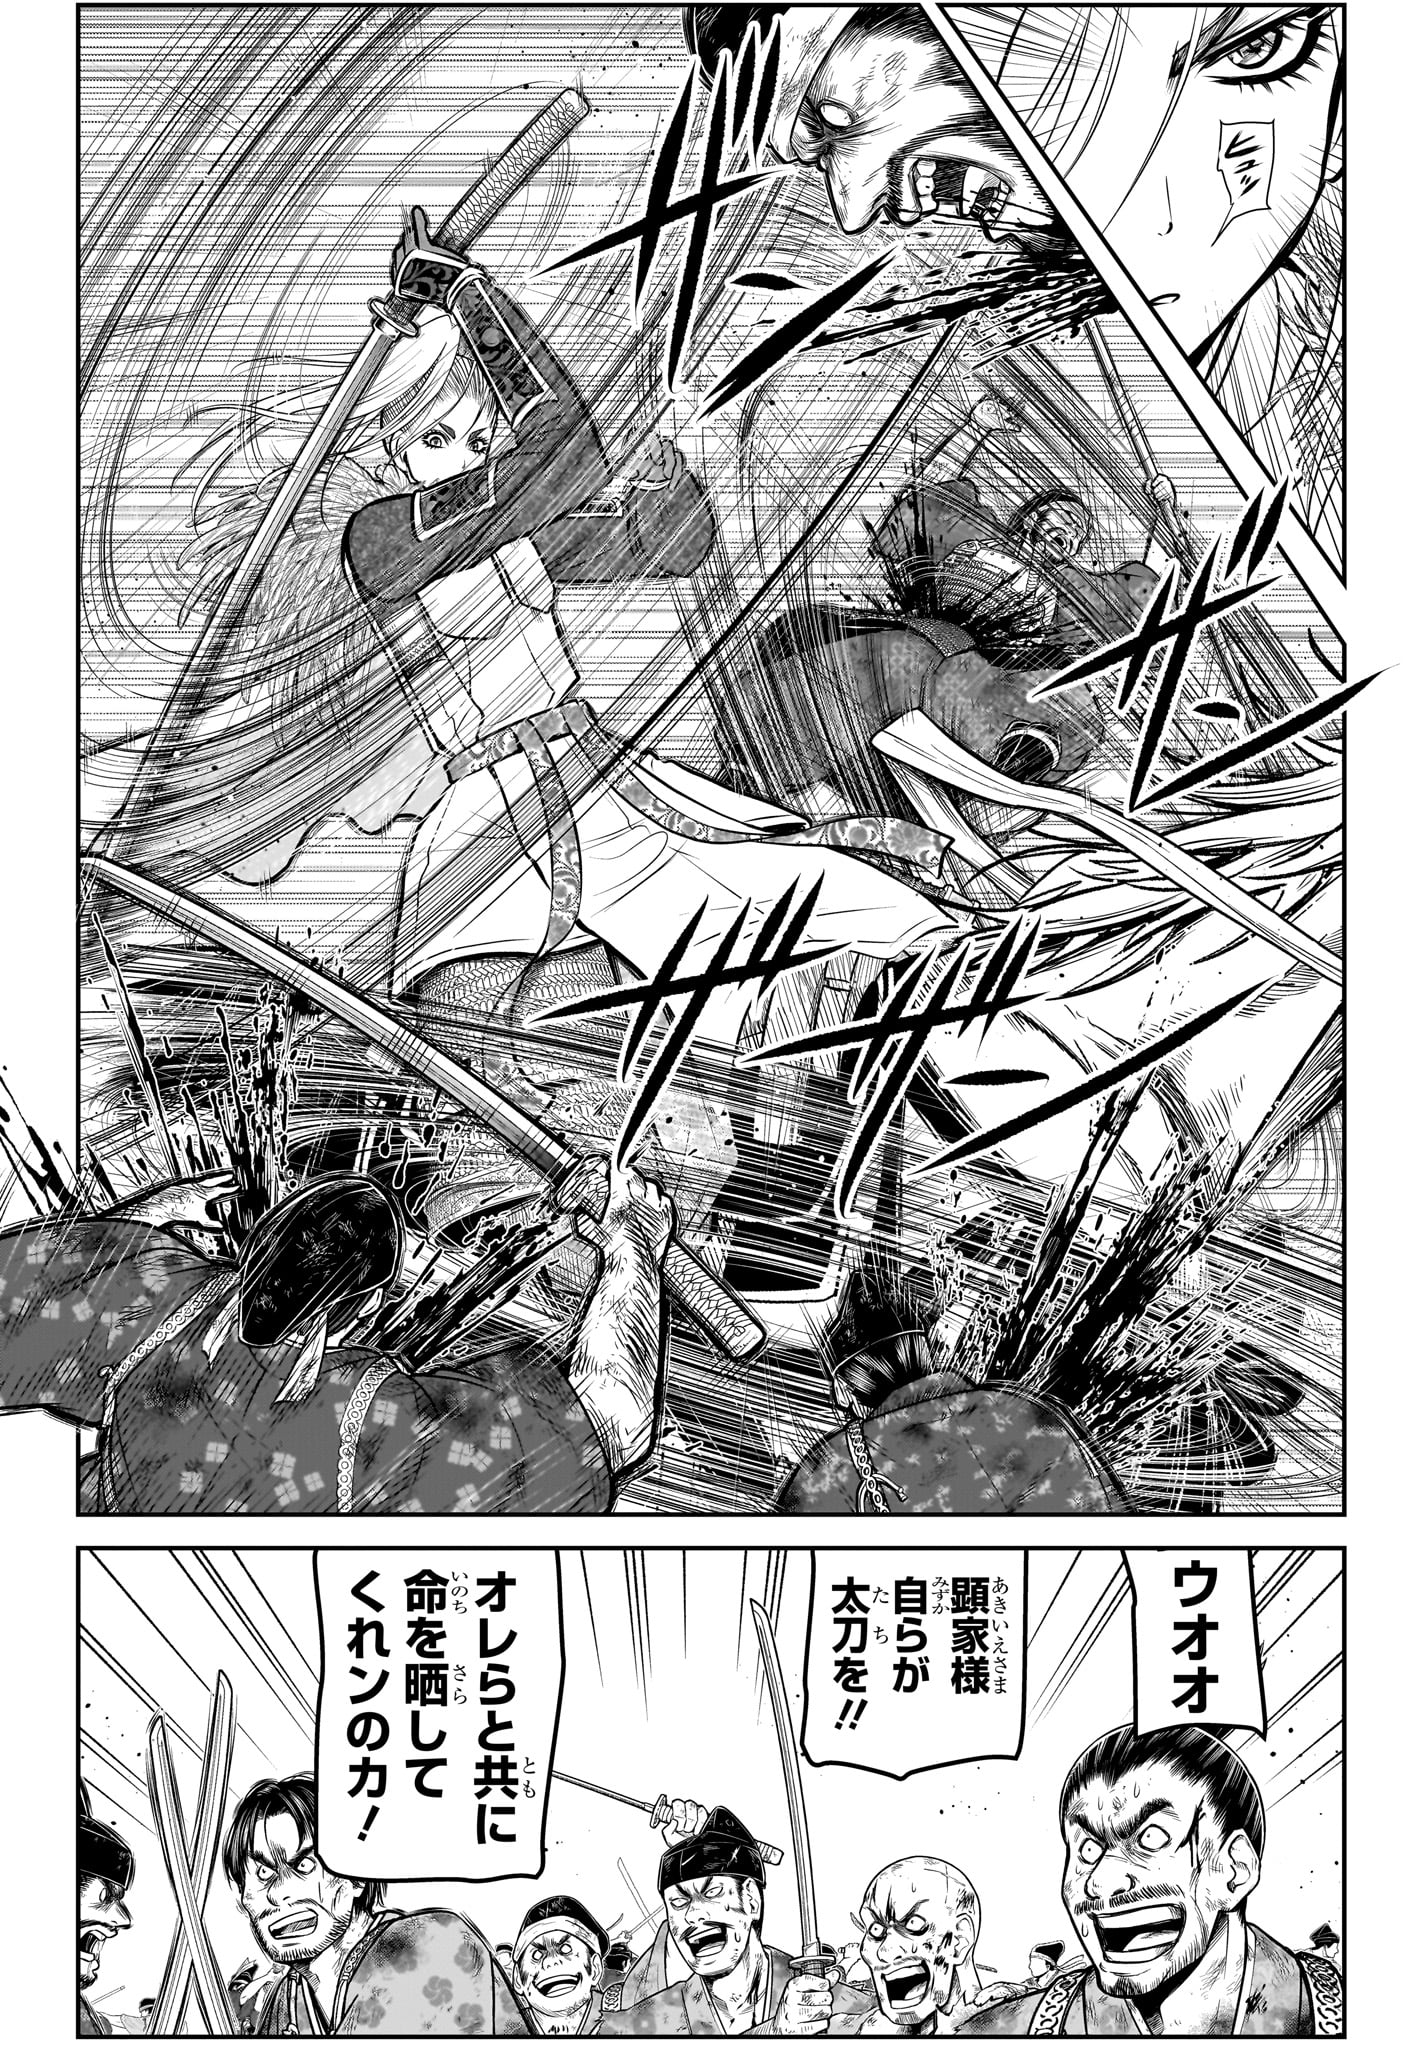 Nige Jouzu no Wakagimi - Chapter 165 - Page 4